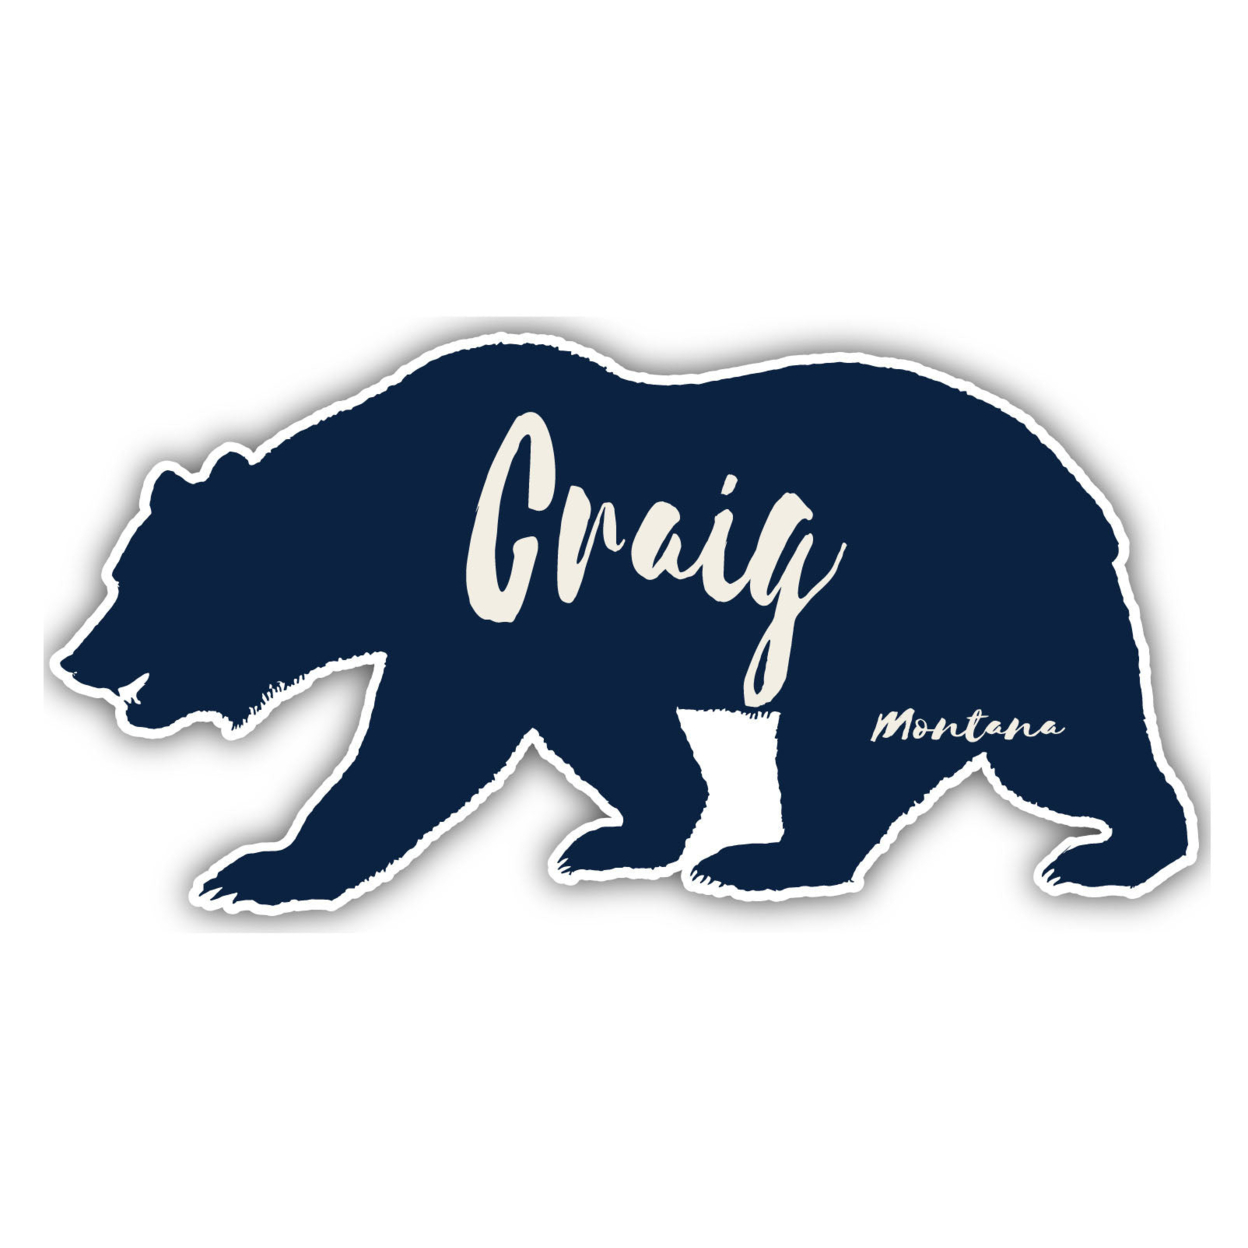 Craig Montana Souvenir Decorative Stickers (Choose Theme And Size) - 4-Pack, 4-Inch, Bear